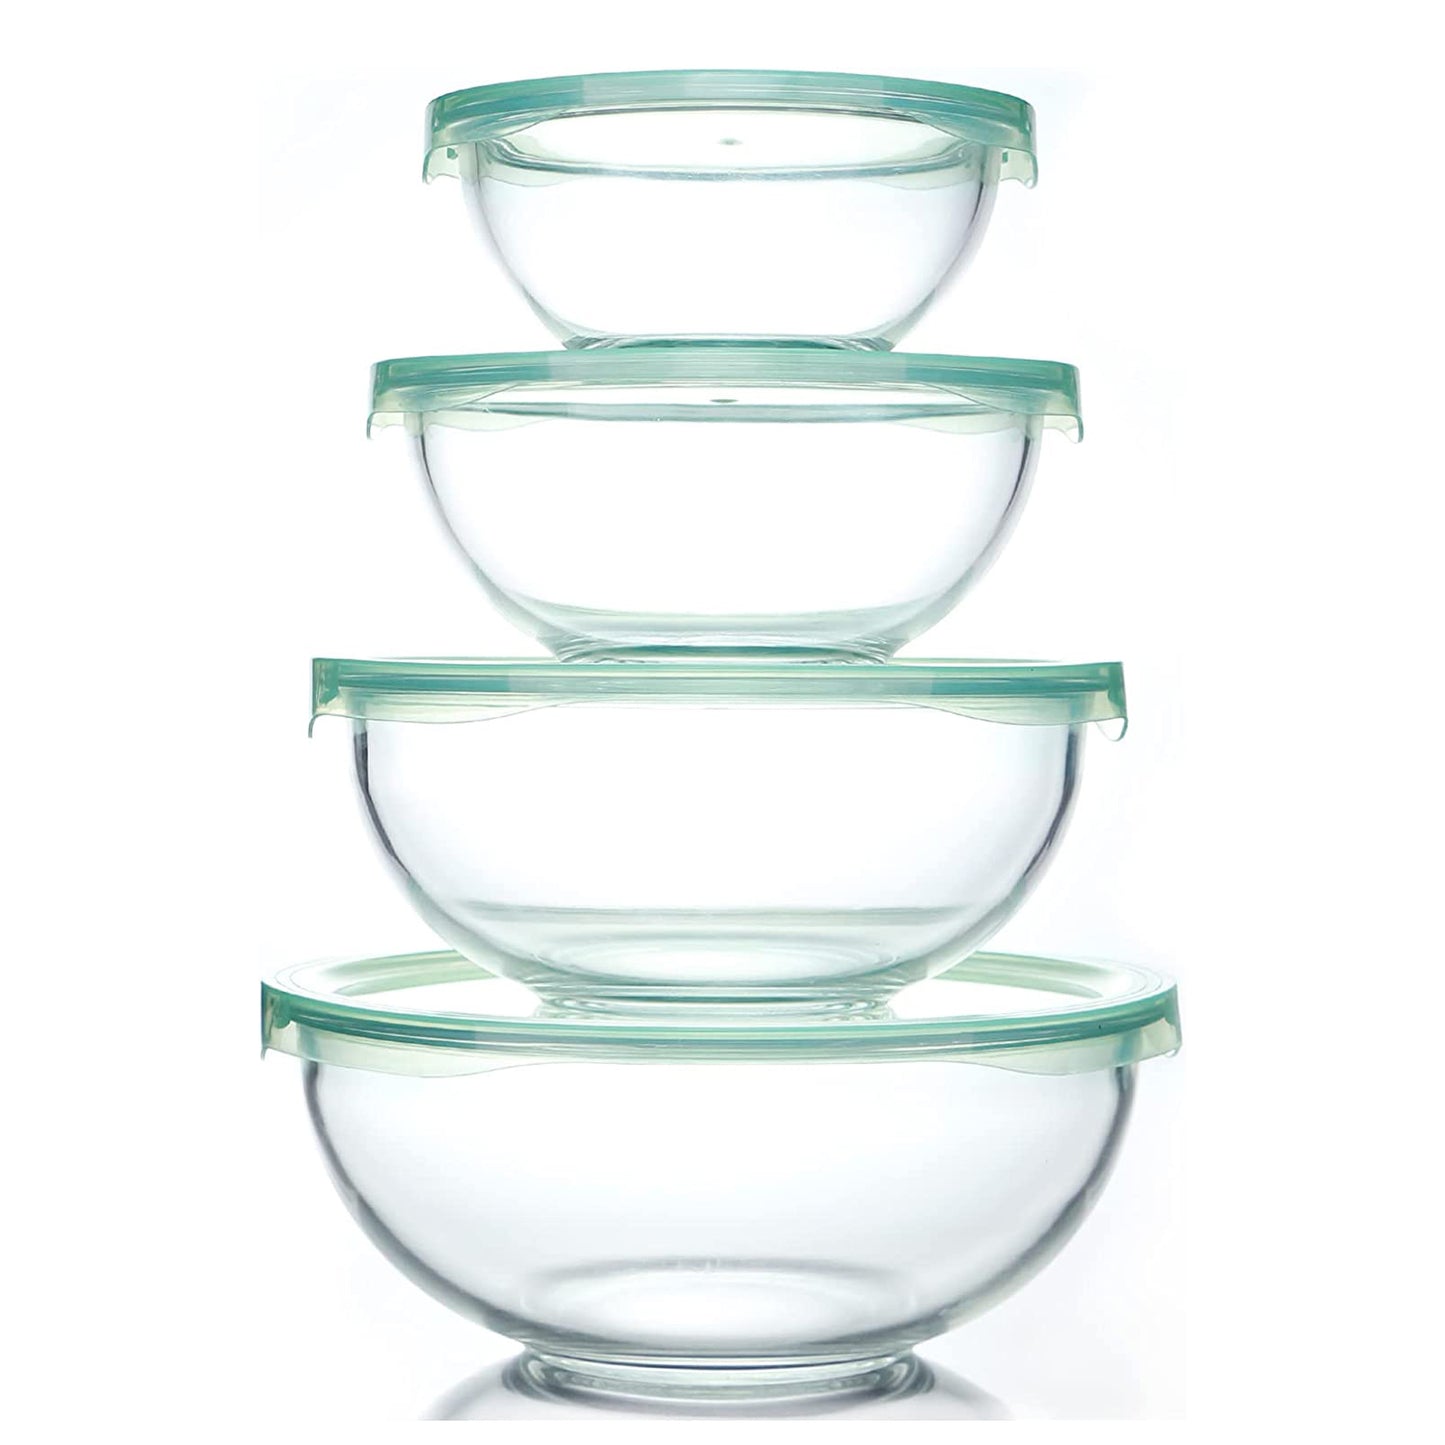 Glass Mixing Bowl with Airtight Lids, (1QT, 1.5QT, 2.5QT, 3.7QT)